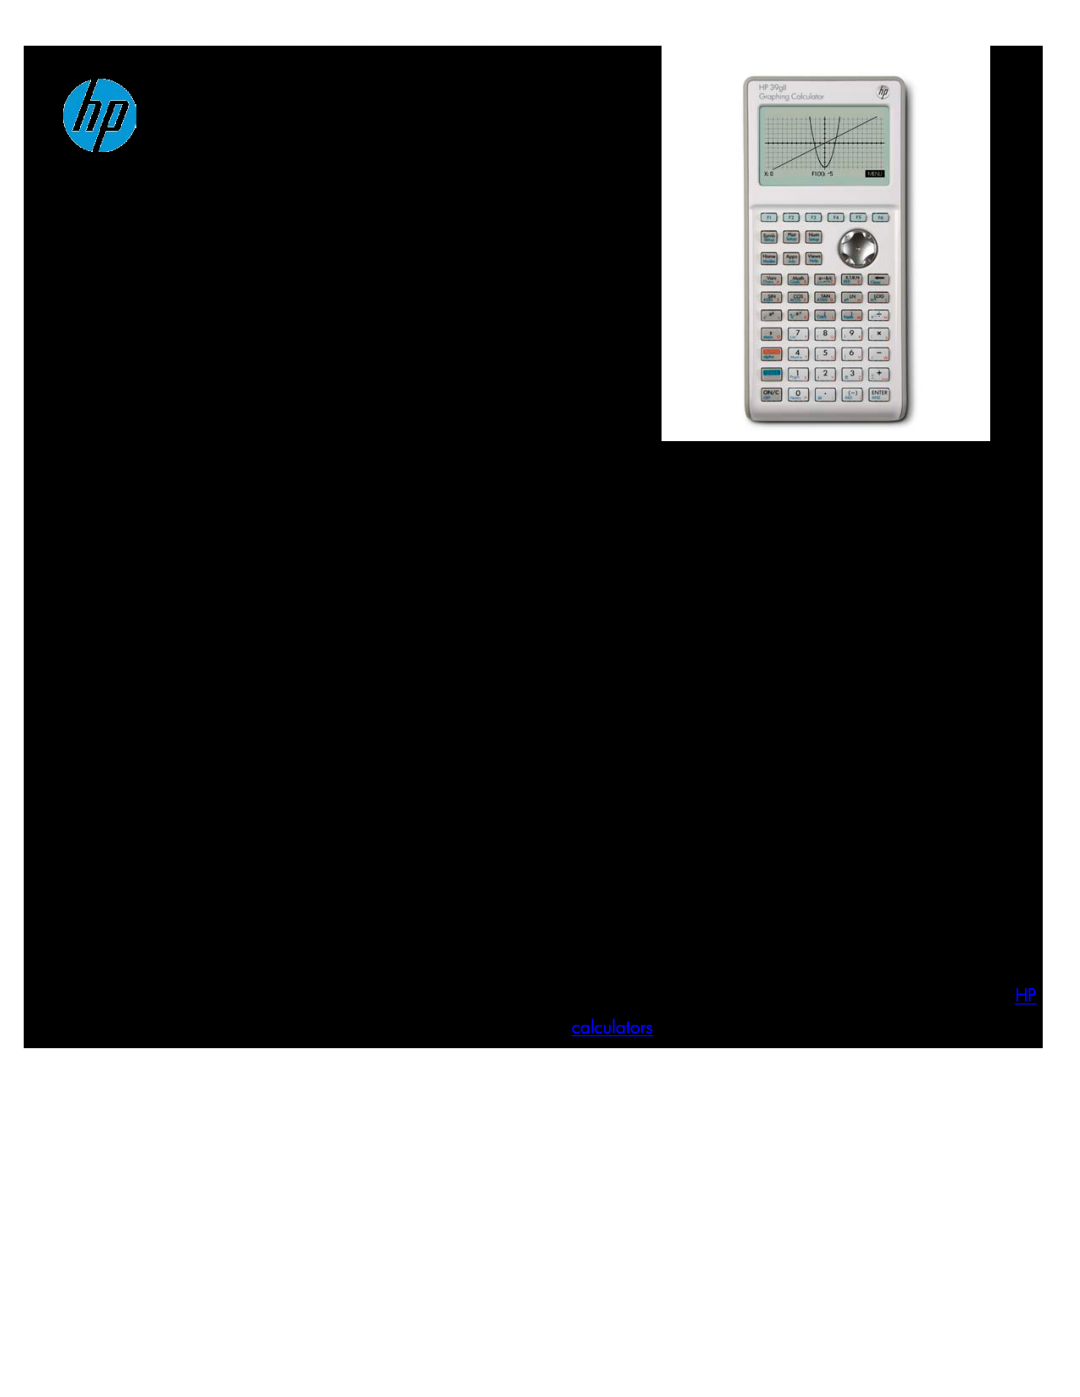 HP manual 39gII Graphing Calculator Power Plus Precision 